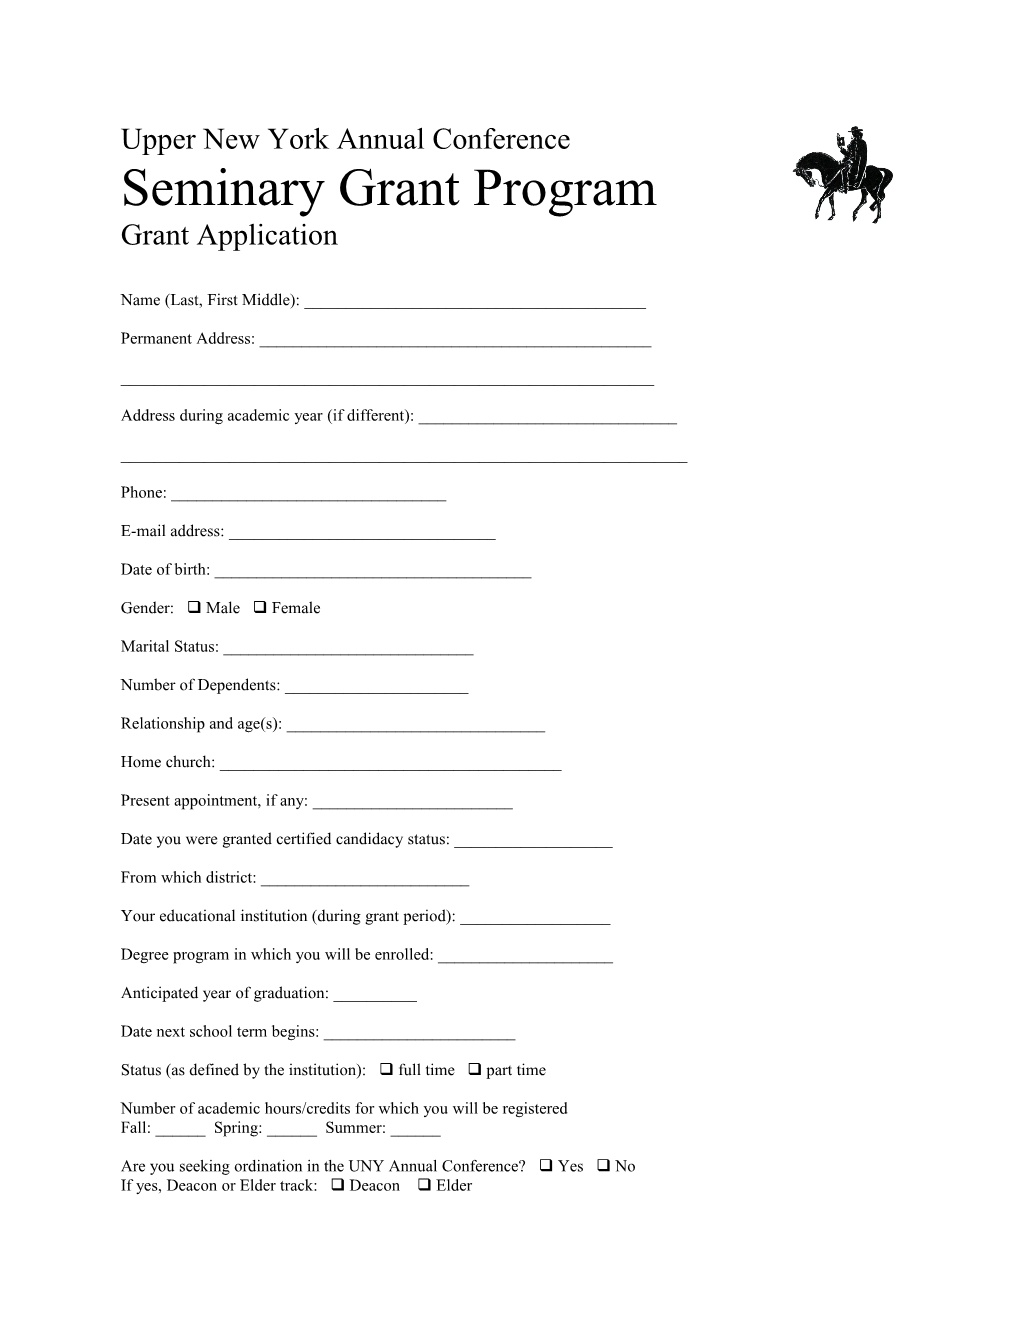 Seminary Grant Program